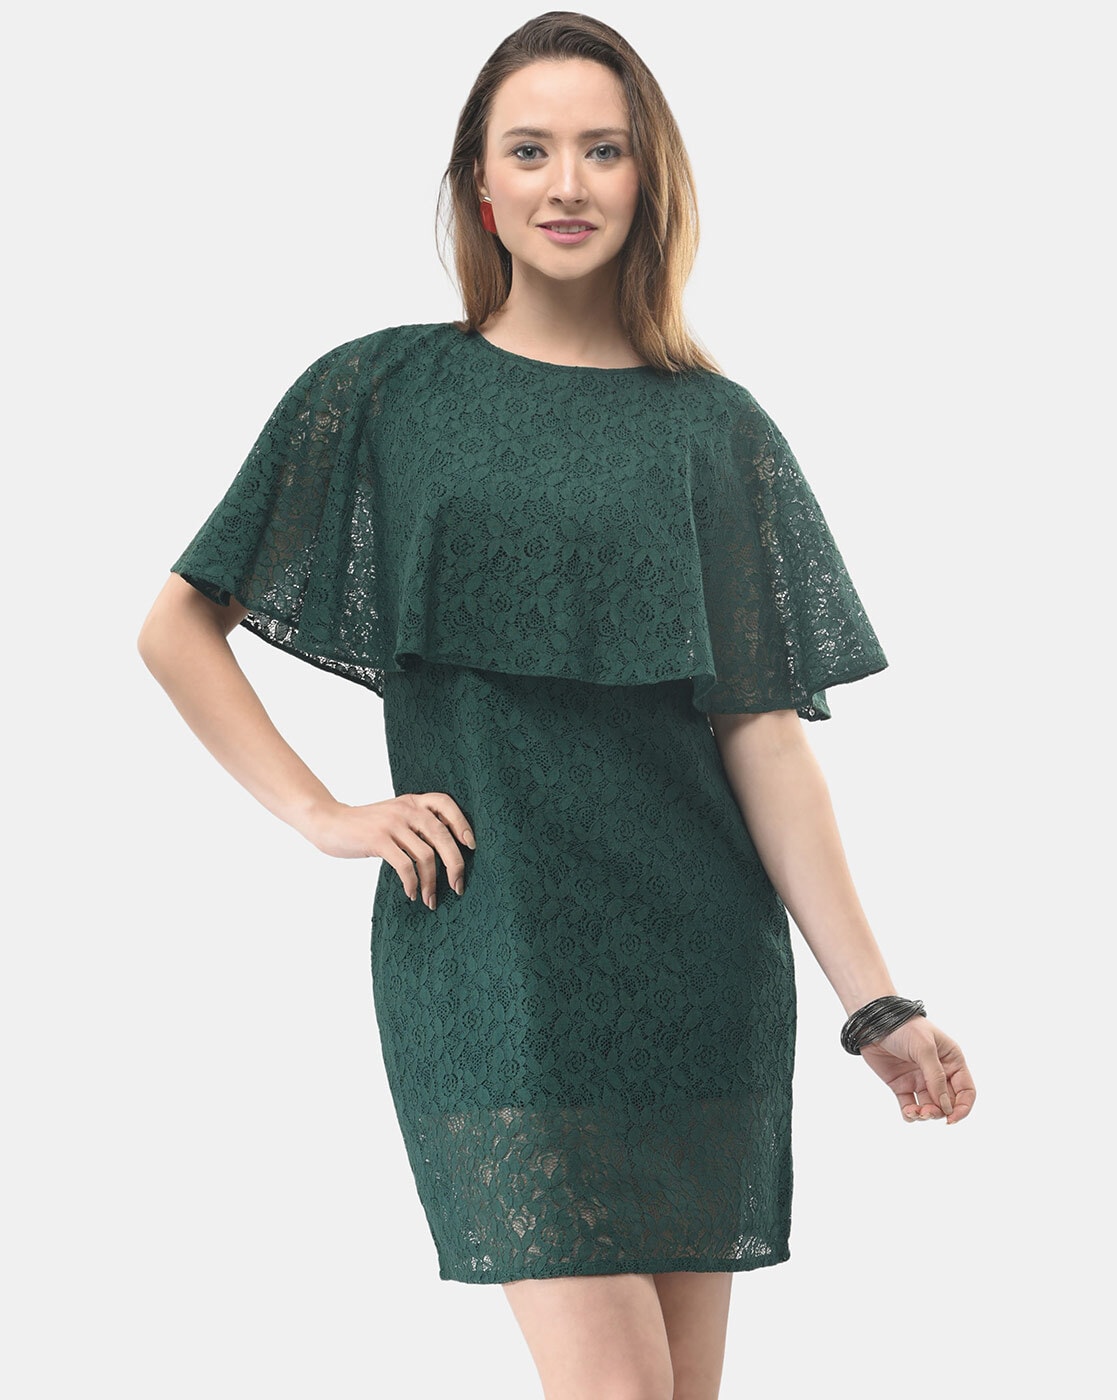 Friday Pattern Company Adrianna Dress - The Fold Line